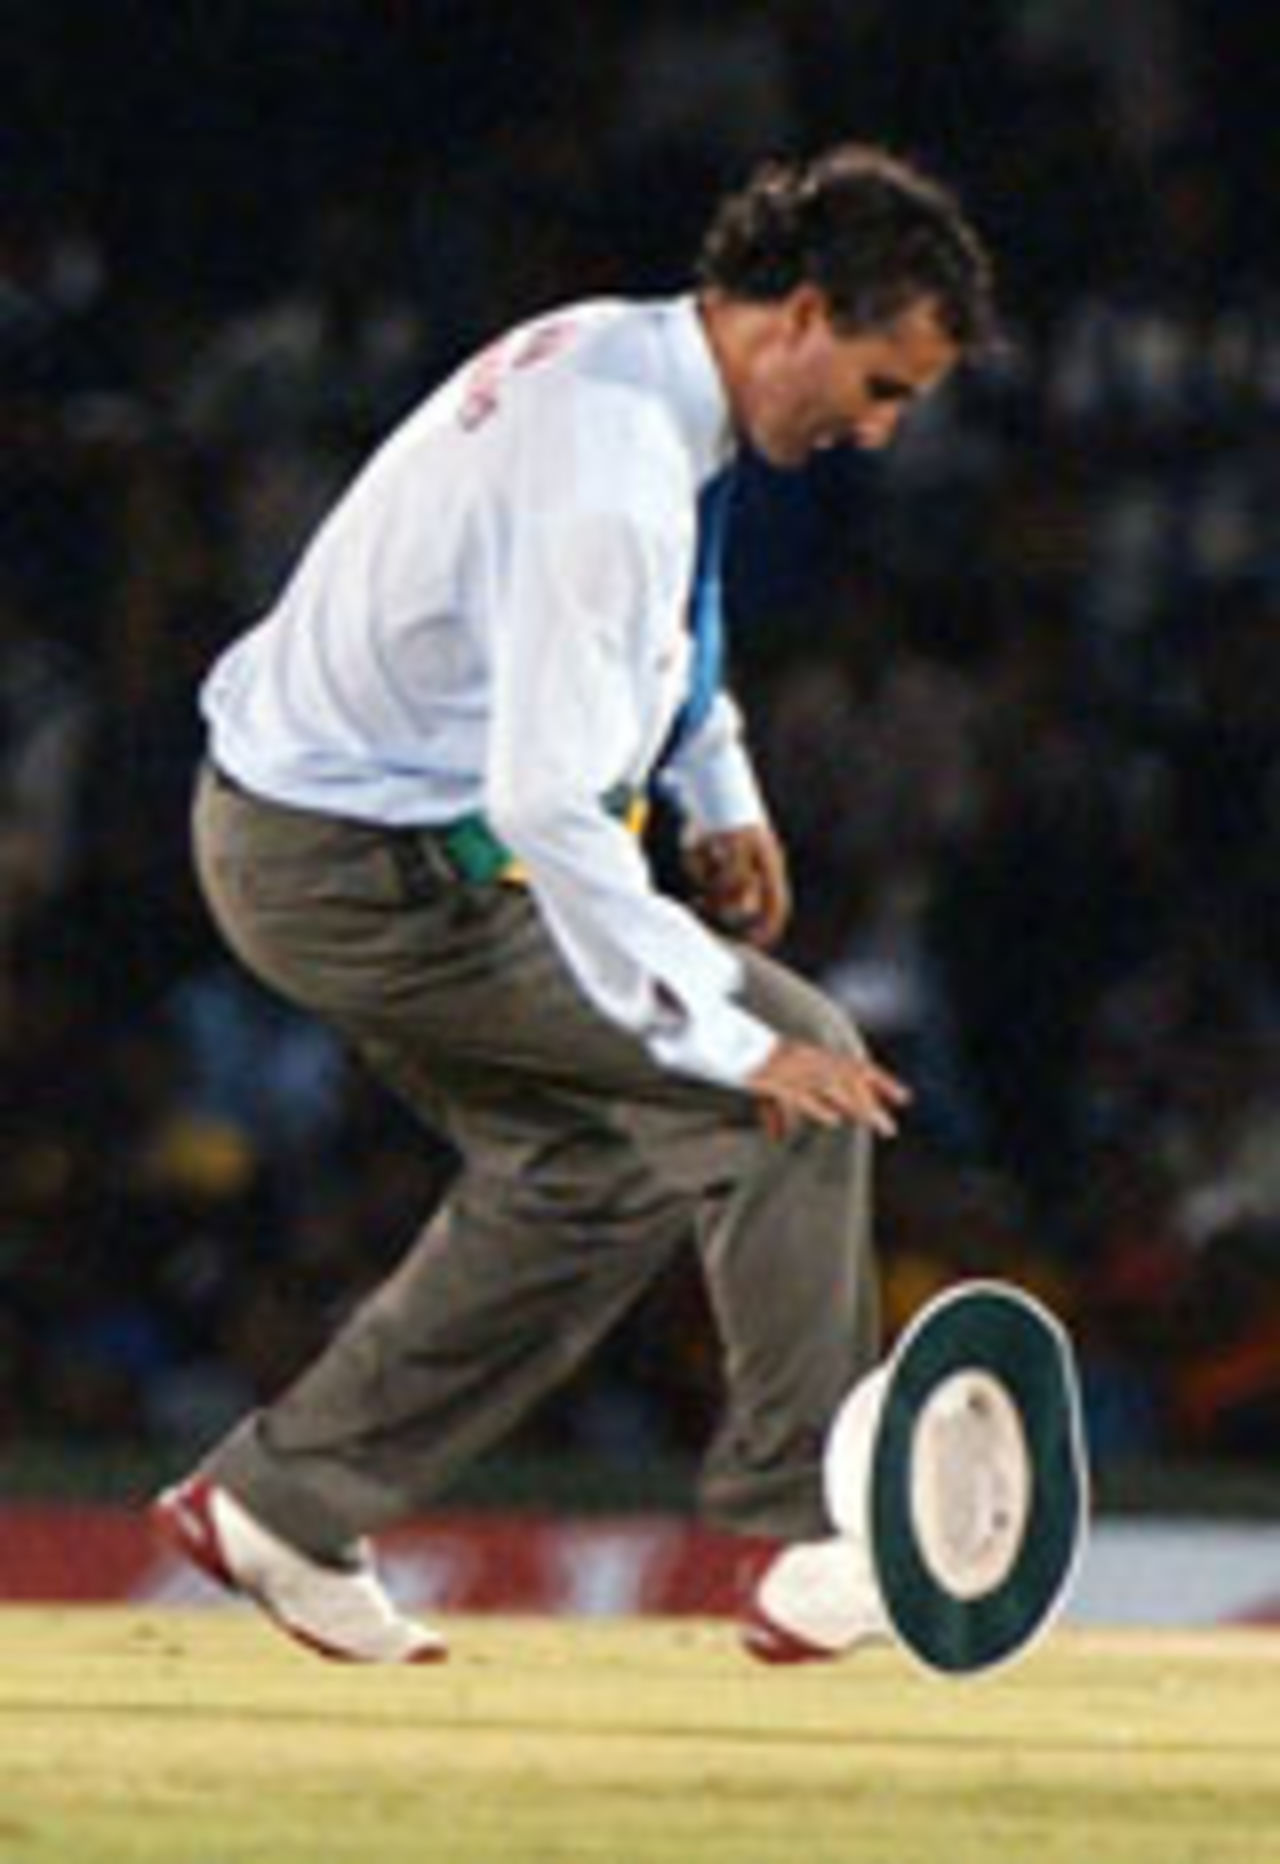 Billy Bowden chasing his hat, Sri Lanka v South Africa, 3rd ODI, Dambulla, August 25 2004